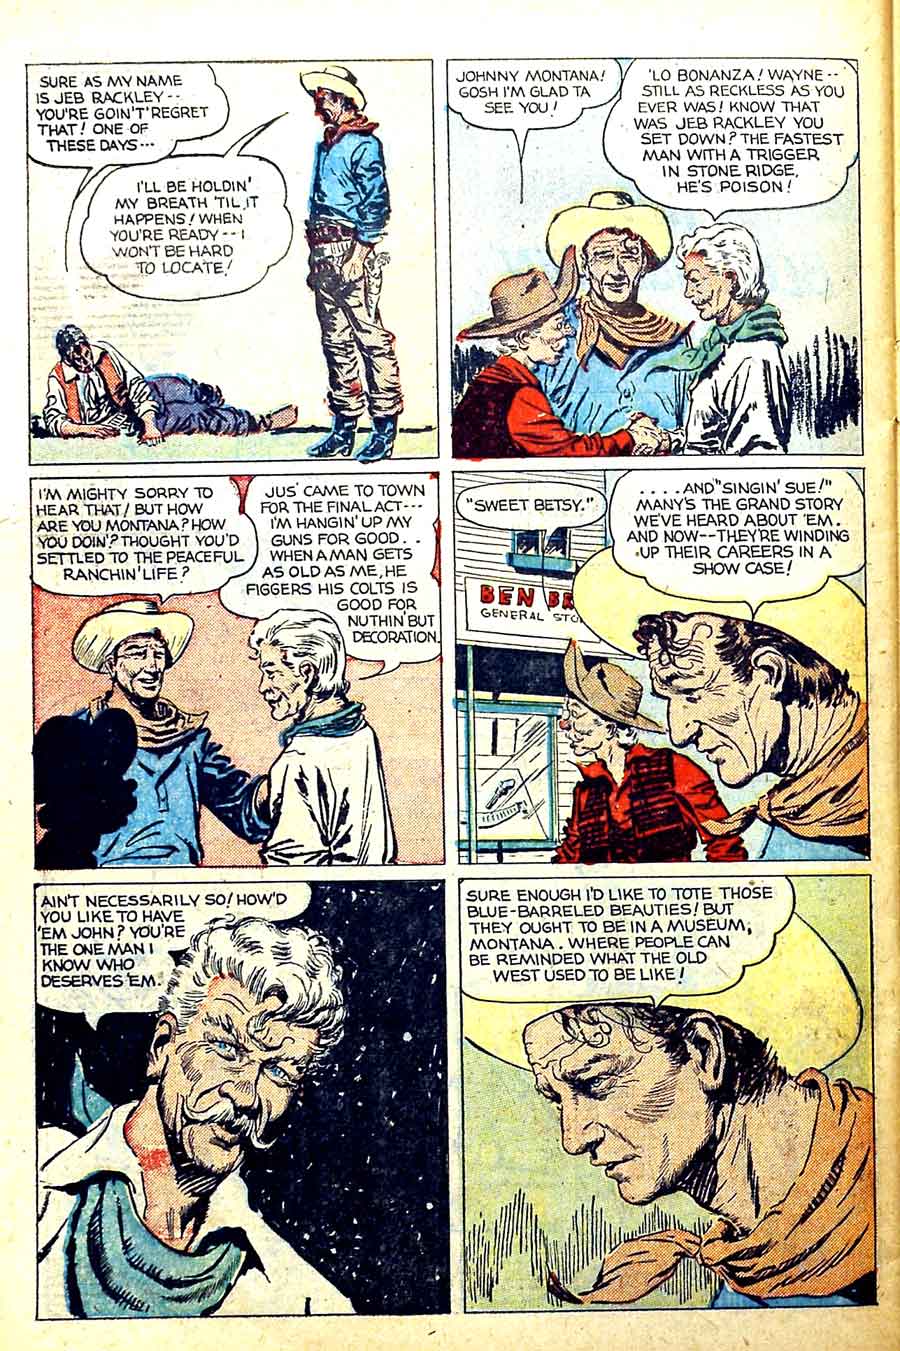 John Wayne Adventure Comics #2 golden age 1950s western comic book page art by Al Williamson / Frank Frazetta